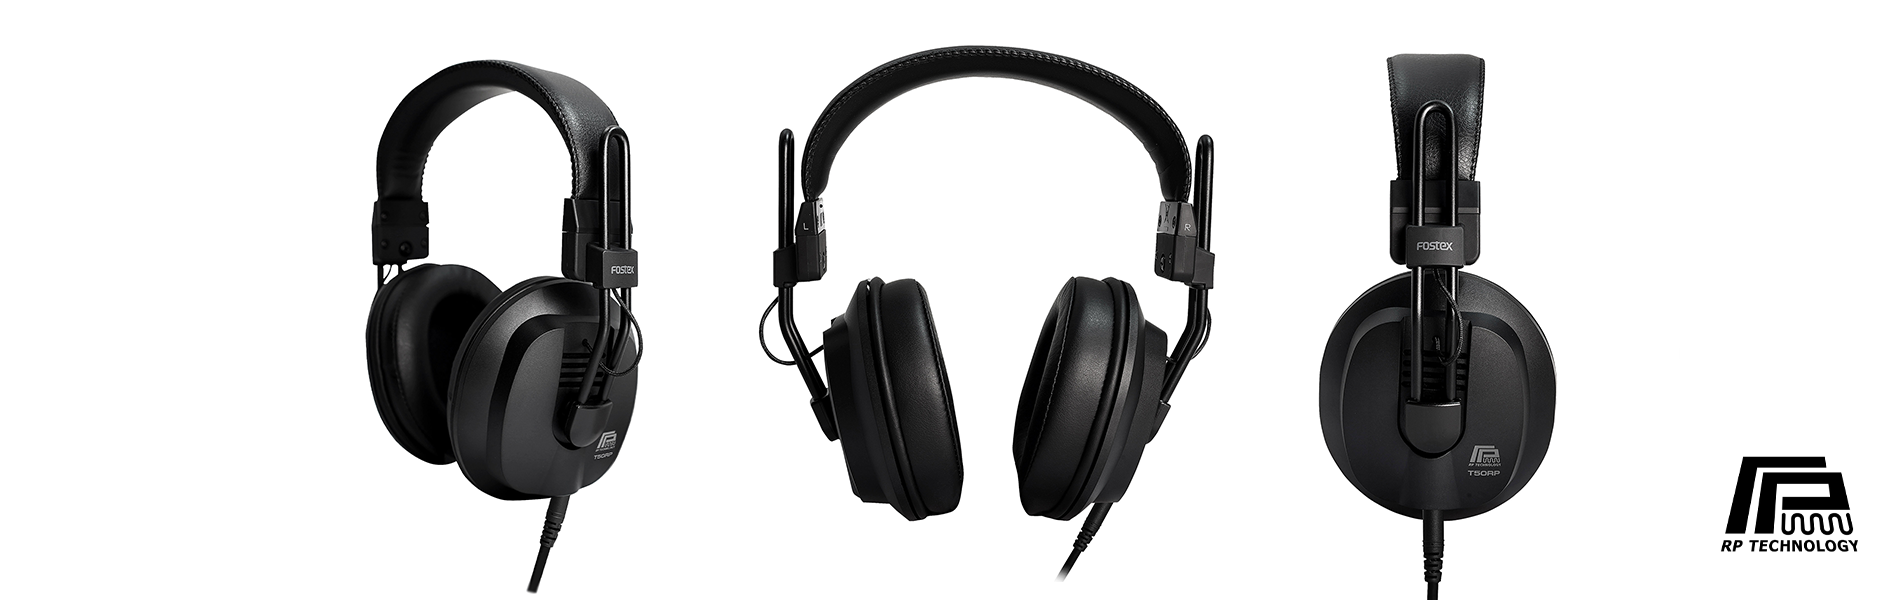 Fostex T50RPmk4 Semi Open-Back Headphones Multiple Views